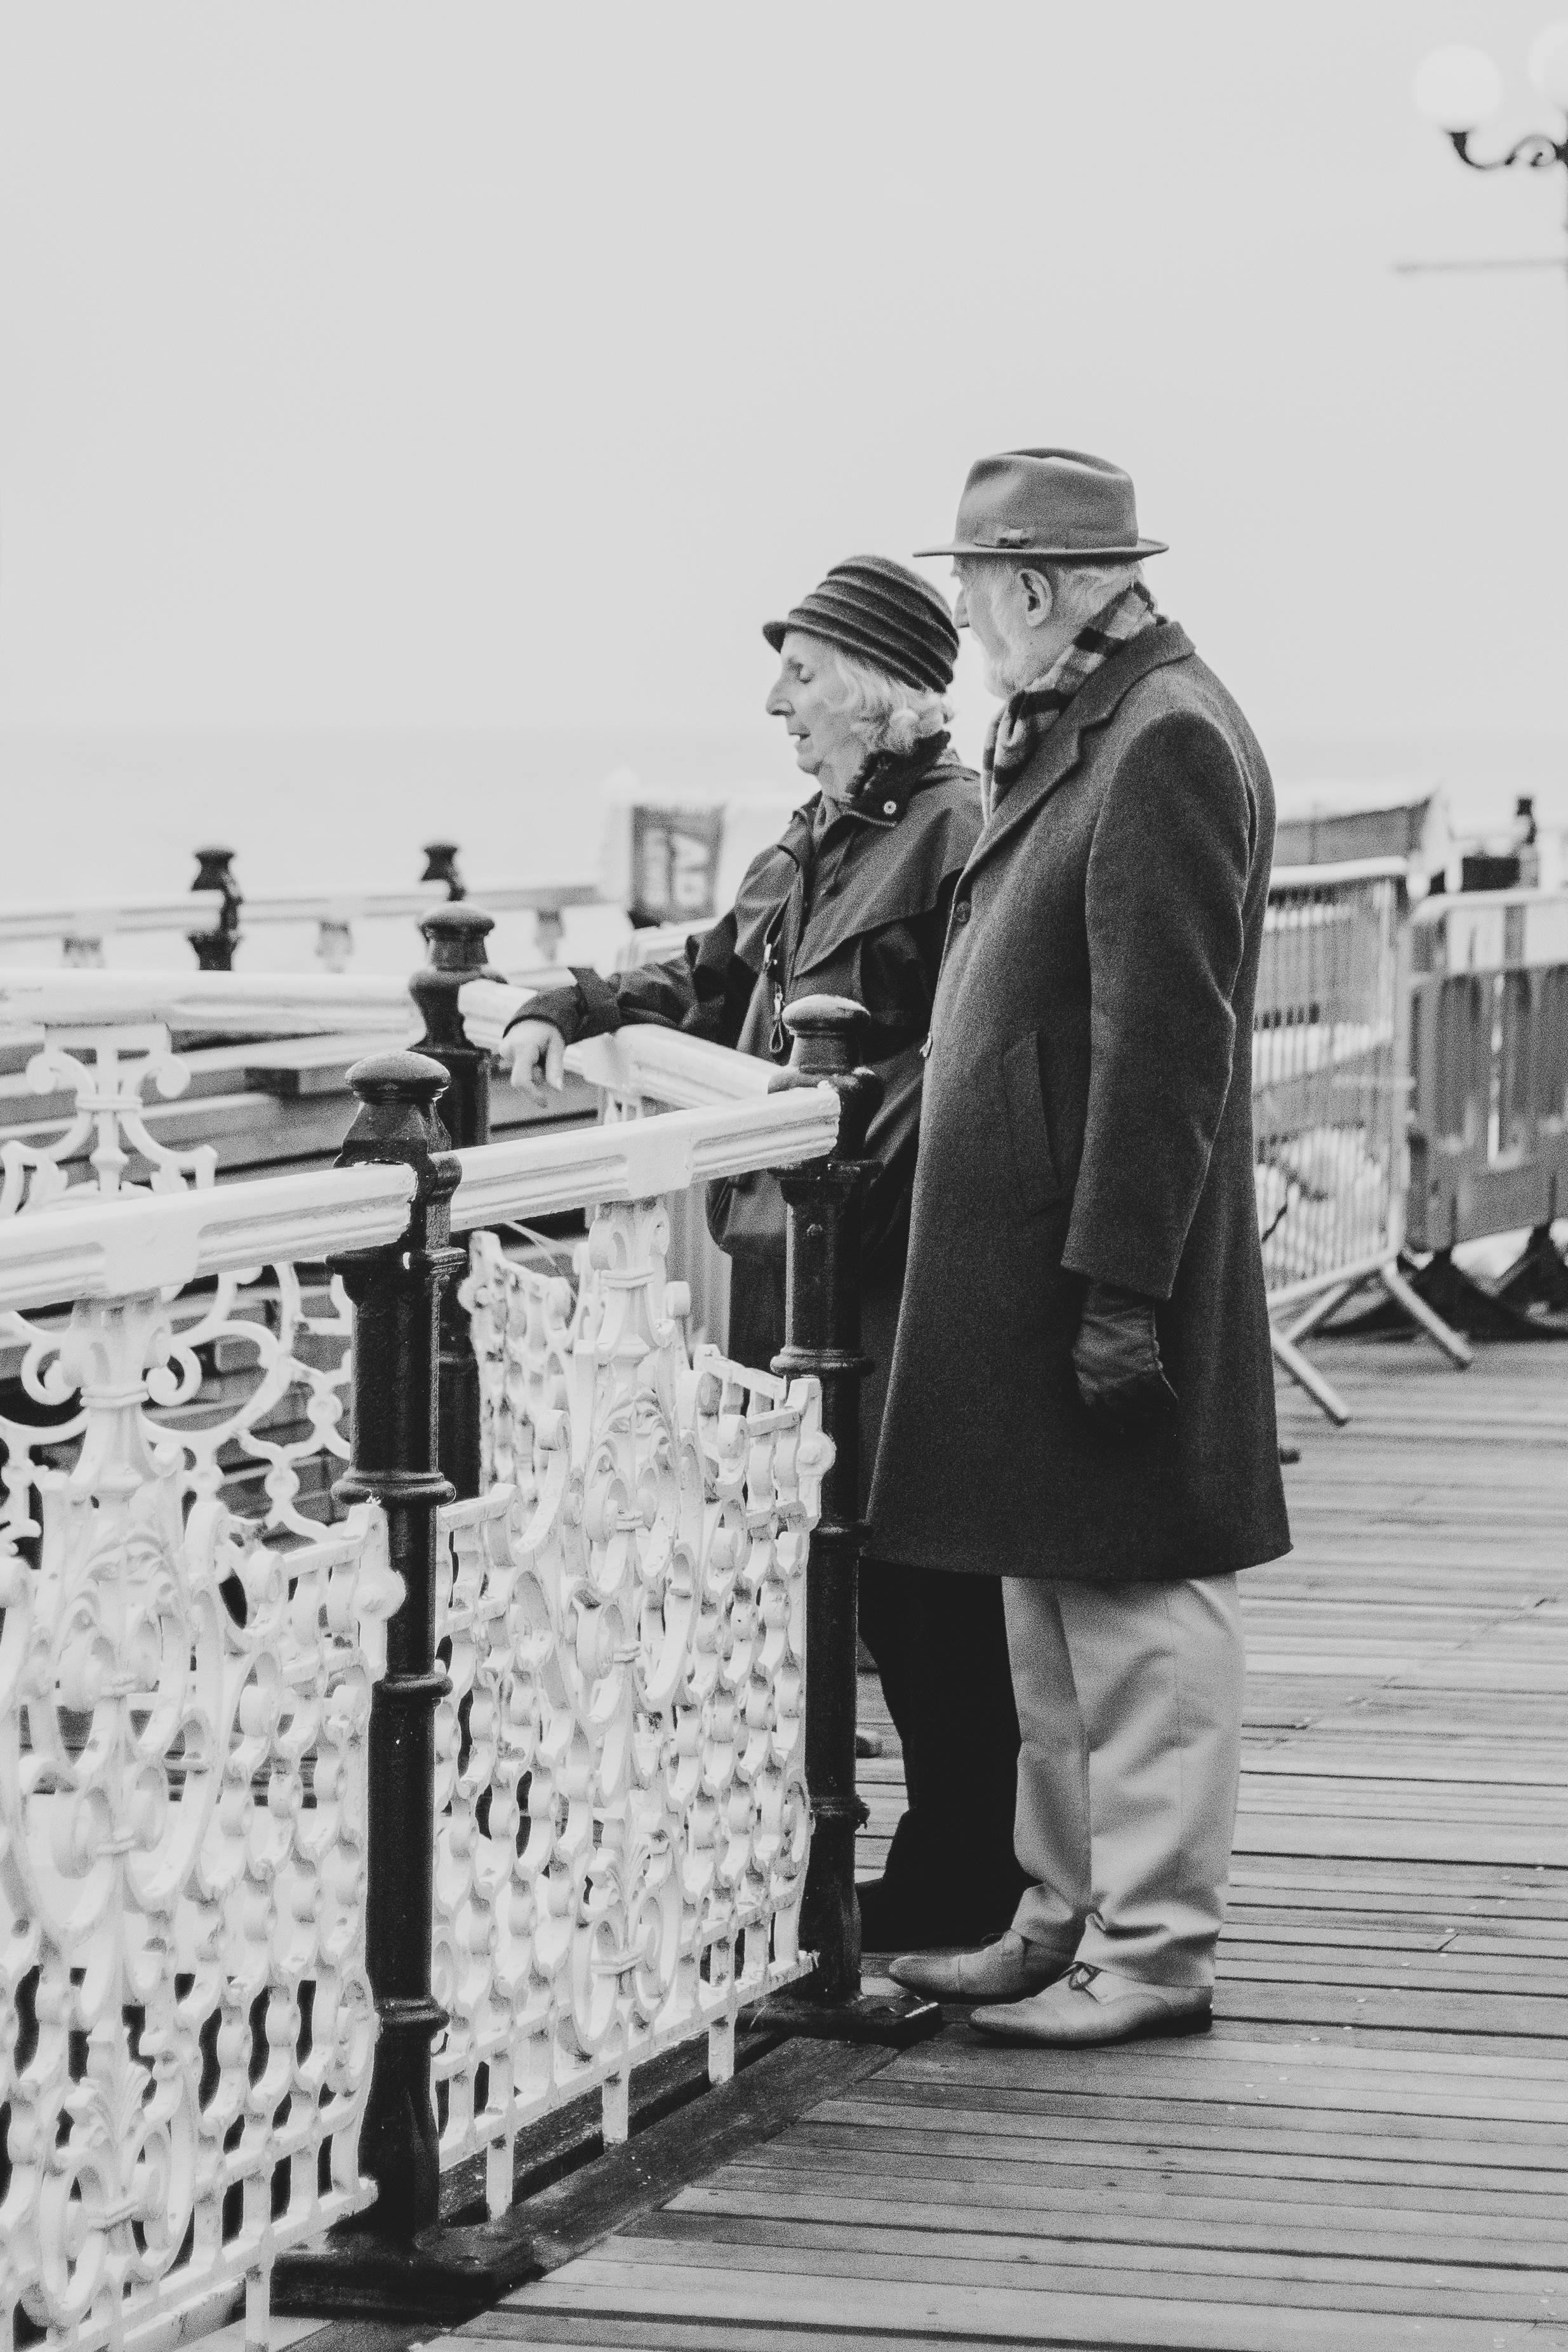 A senior couple talking | Source: Pexels